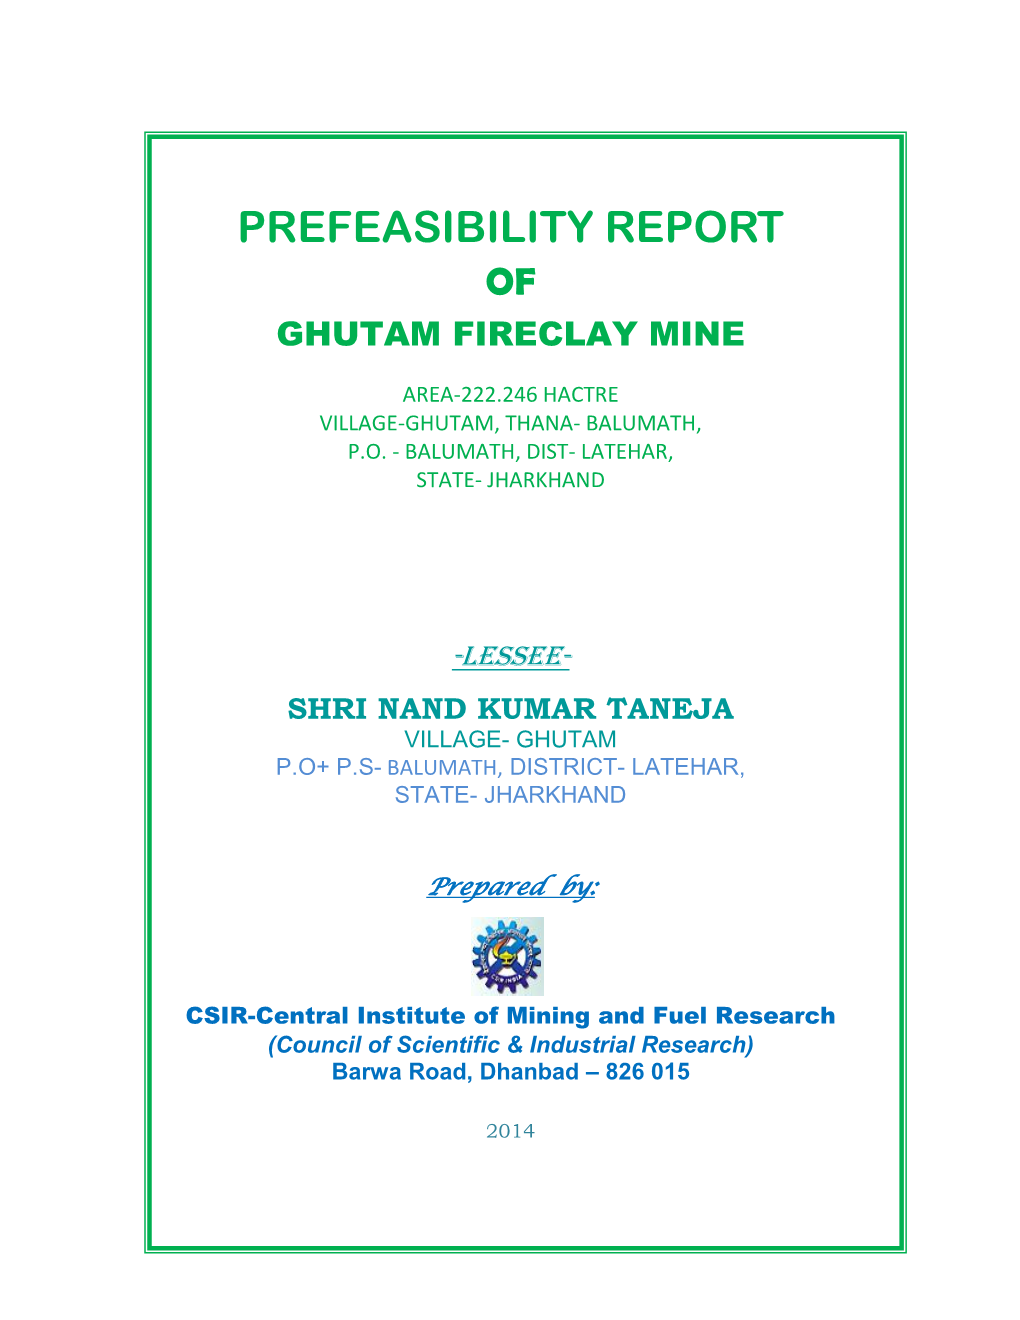 Prefeasibility Report of Ghutam Fireclay Mine